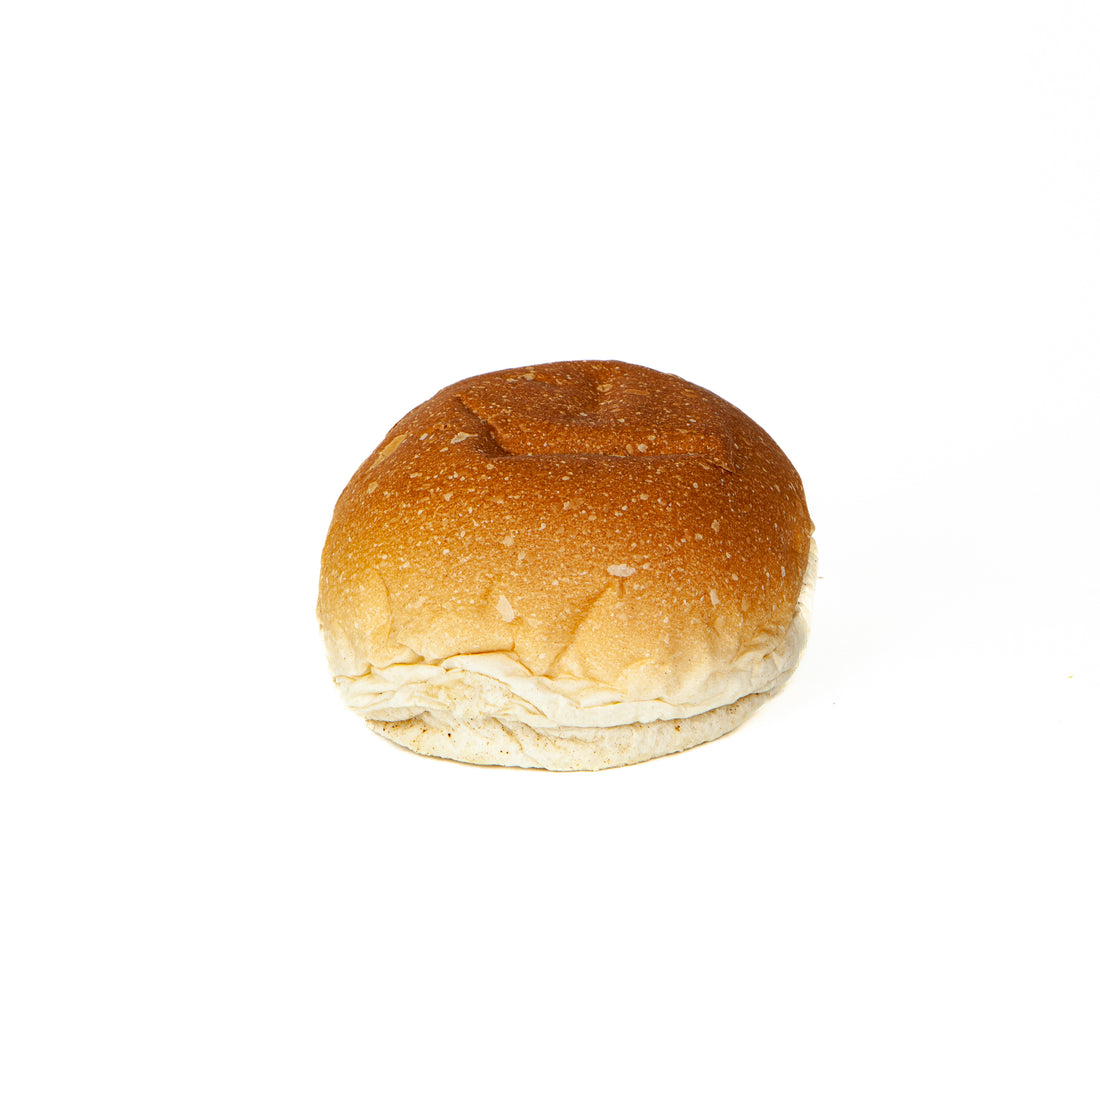 iBun: panino per hamburger, IRRSISTIBILE!